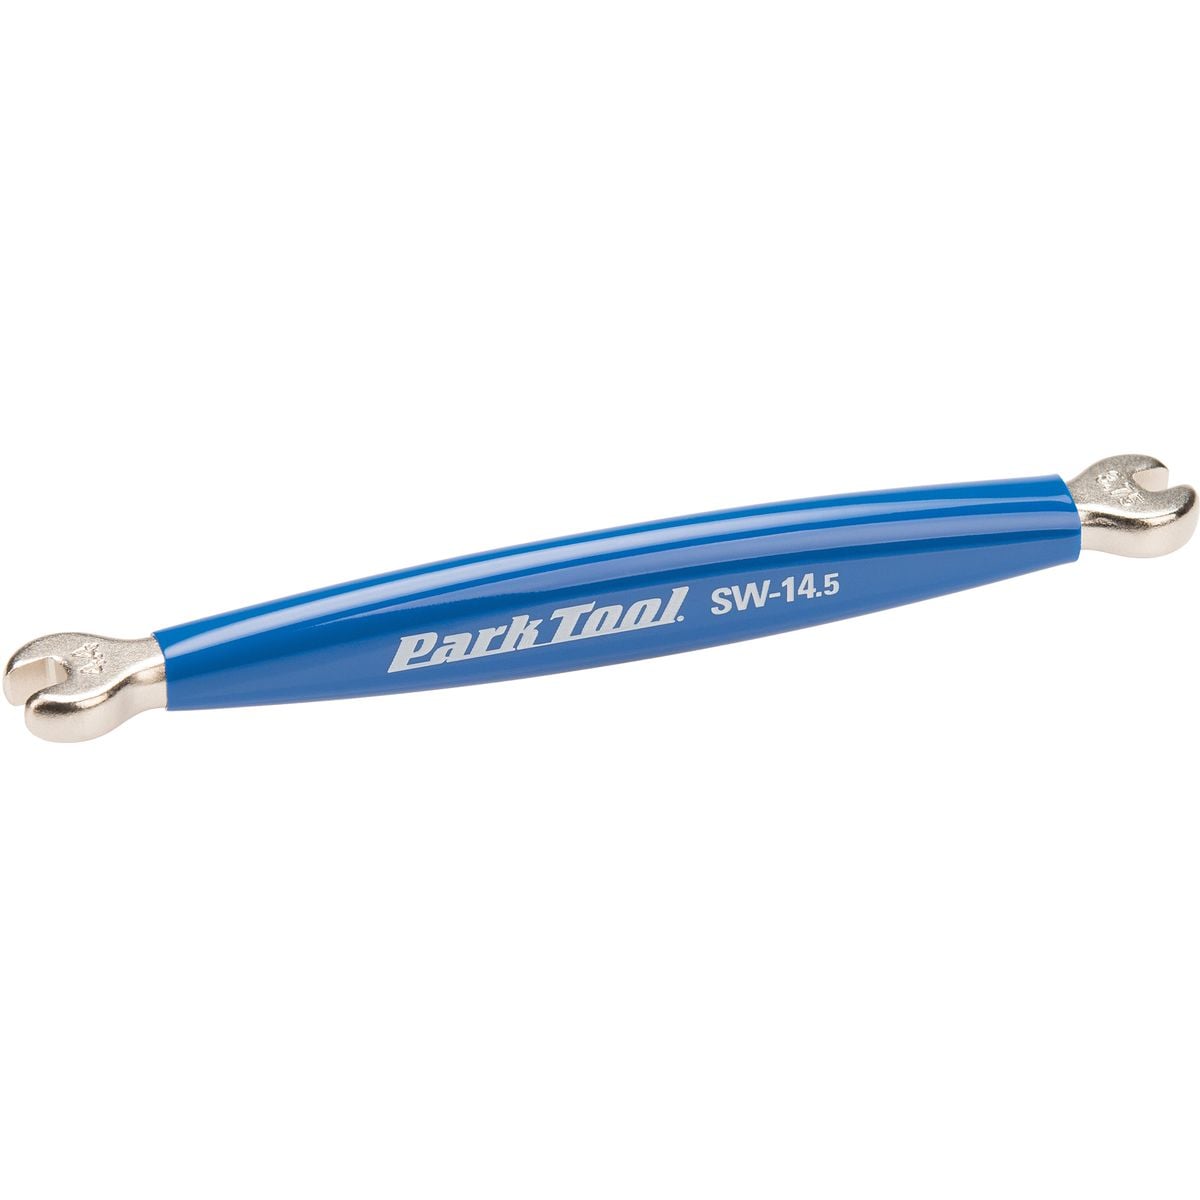 ключ sw 1 иней Sw-14.5 спицеевый ключ shimano wheel systems Park Tool, синий